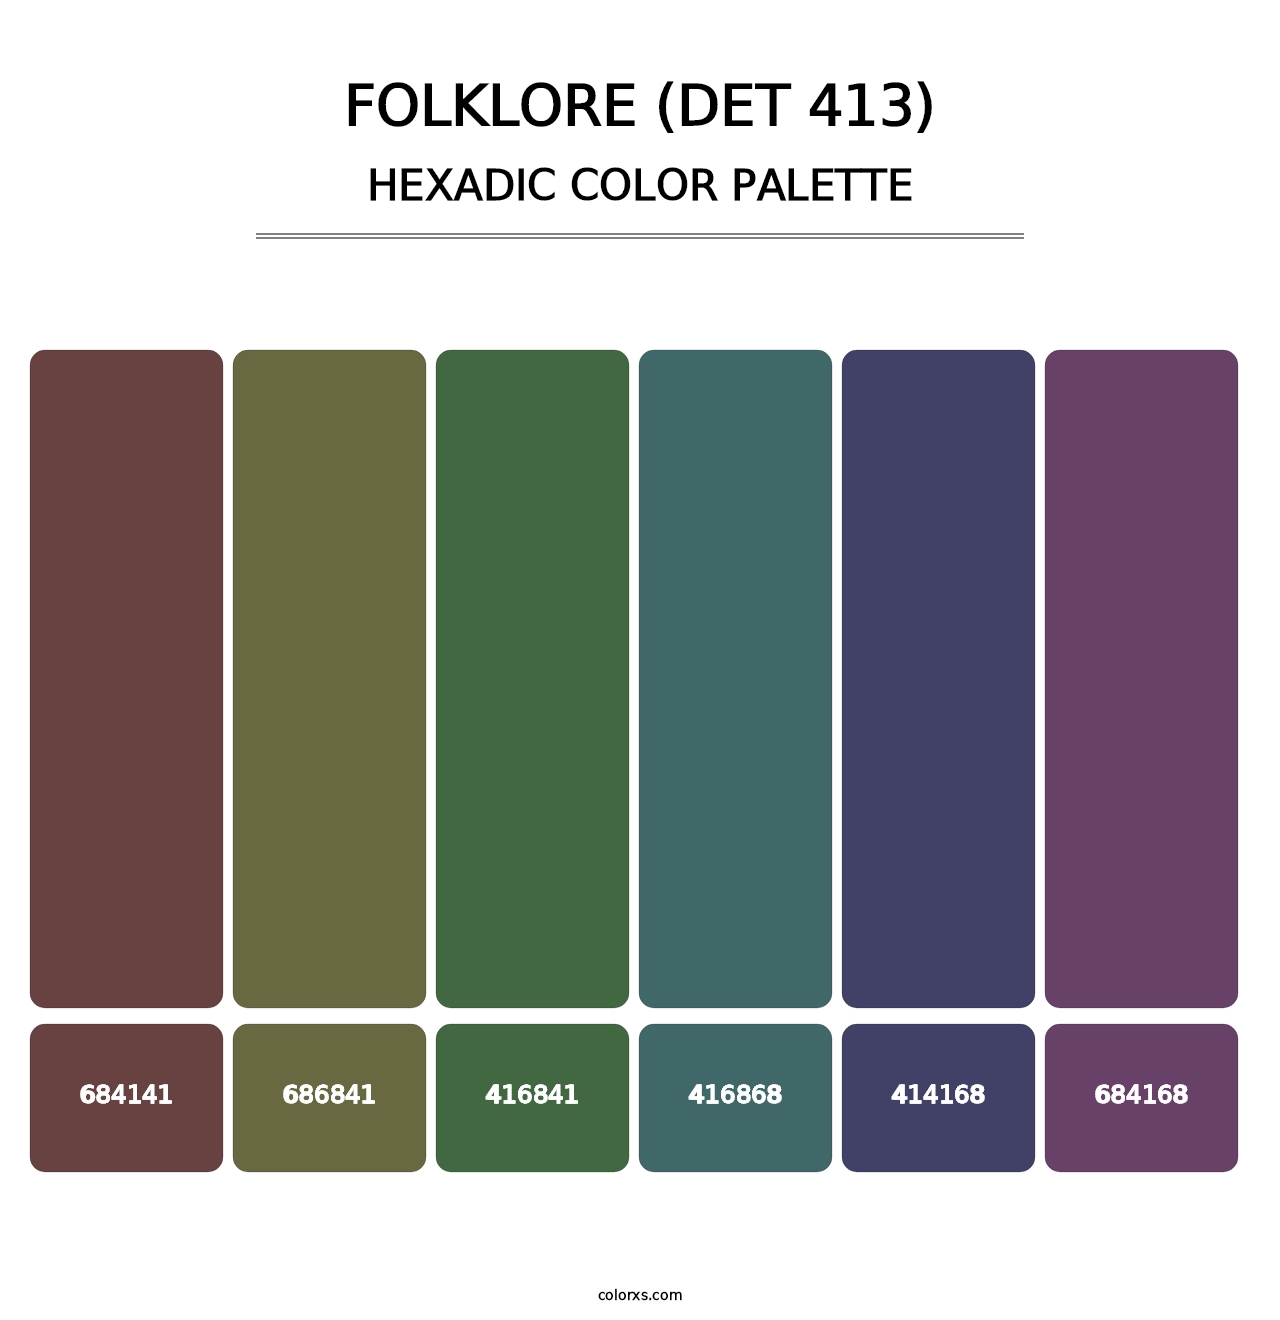 Folklore (DET 413) - Hexadic Color Palette